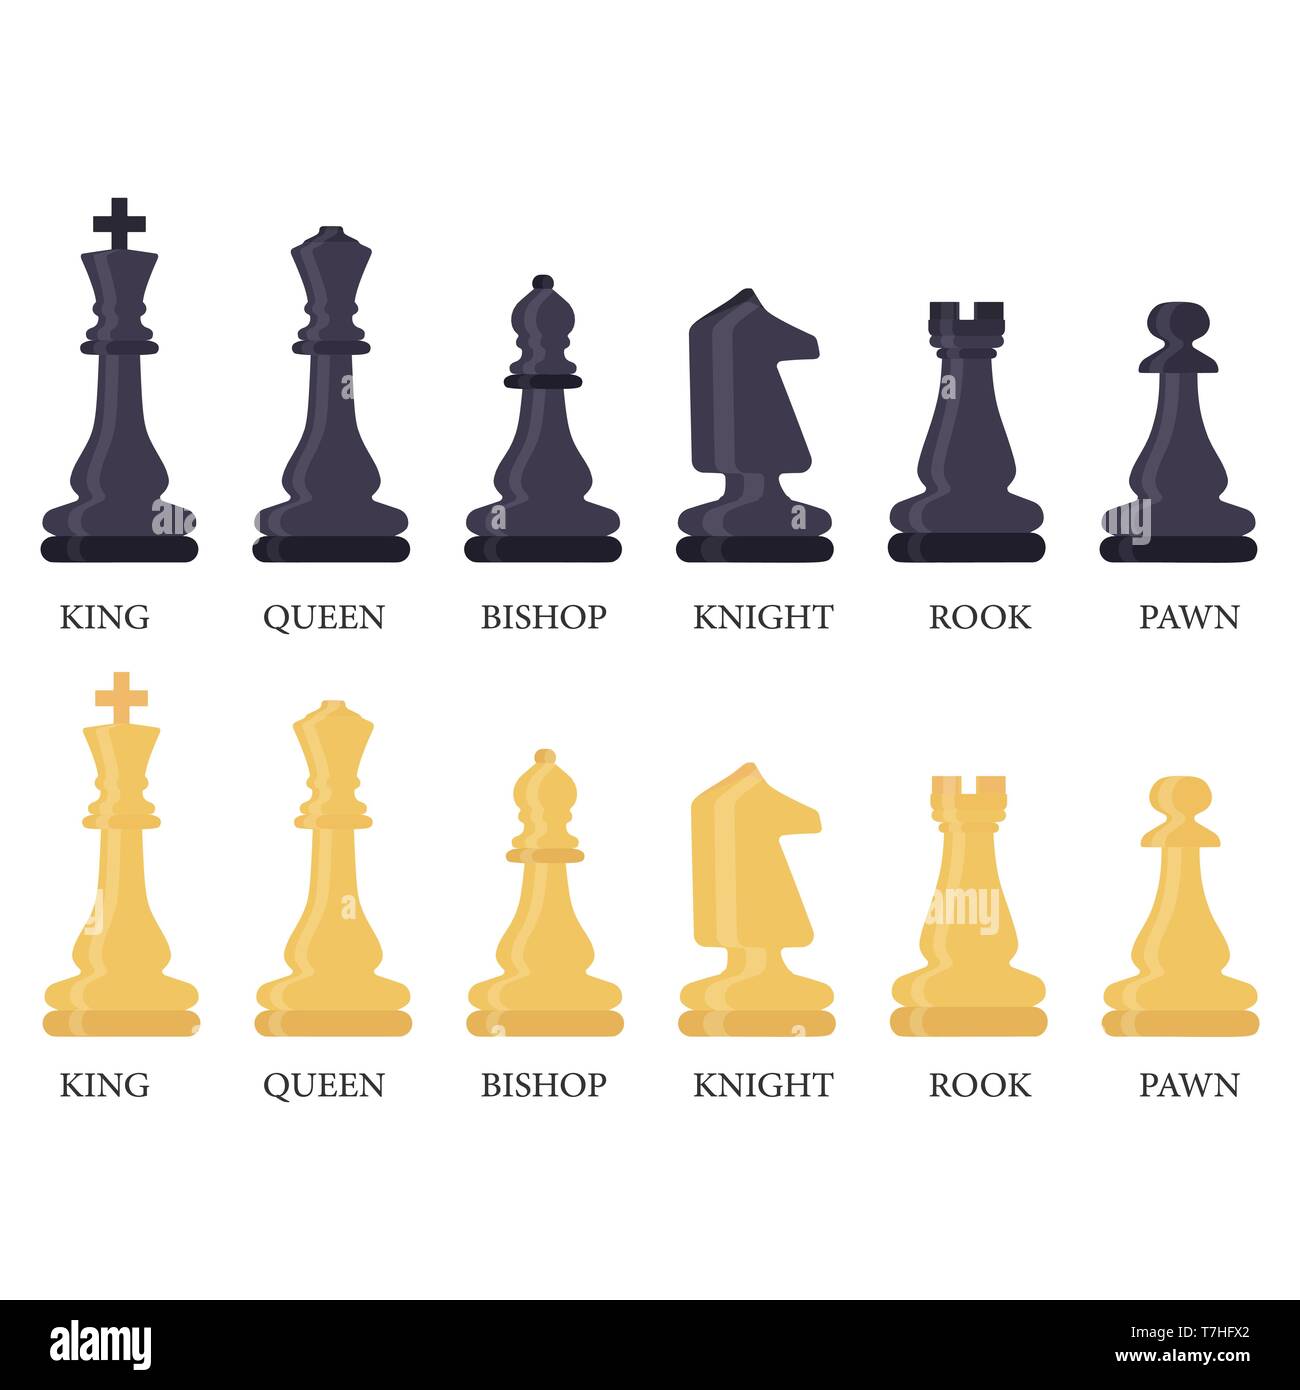 the symbolism of chess — Steemit